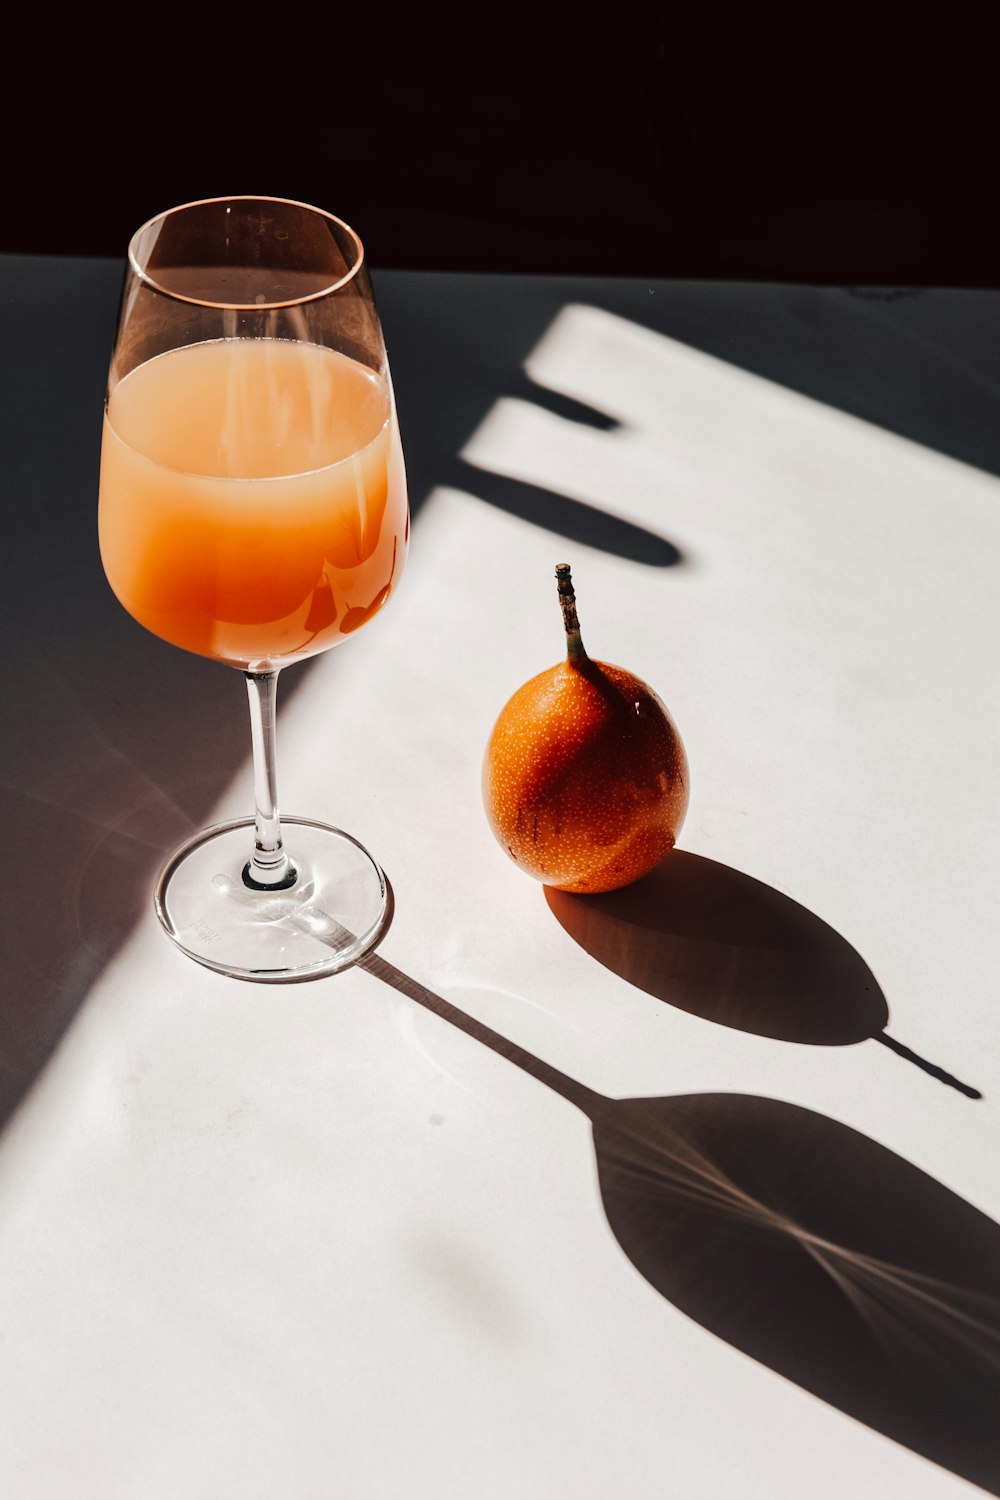 jugo de naranja en copa de vino transparente al lado de una cuchara de plata